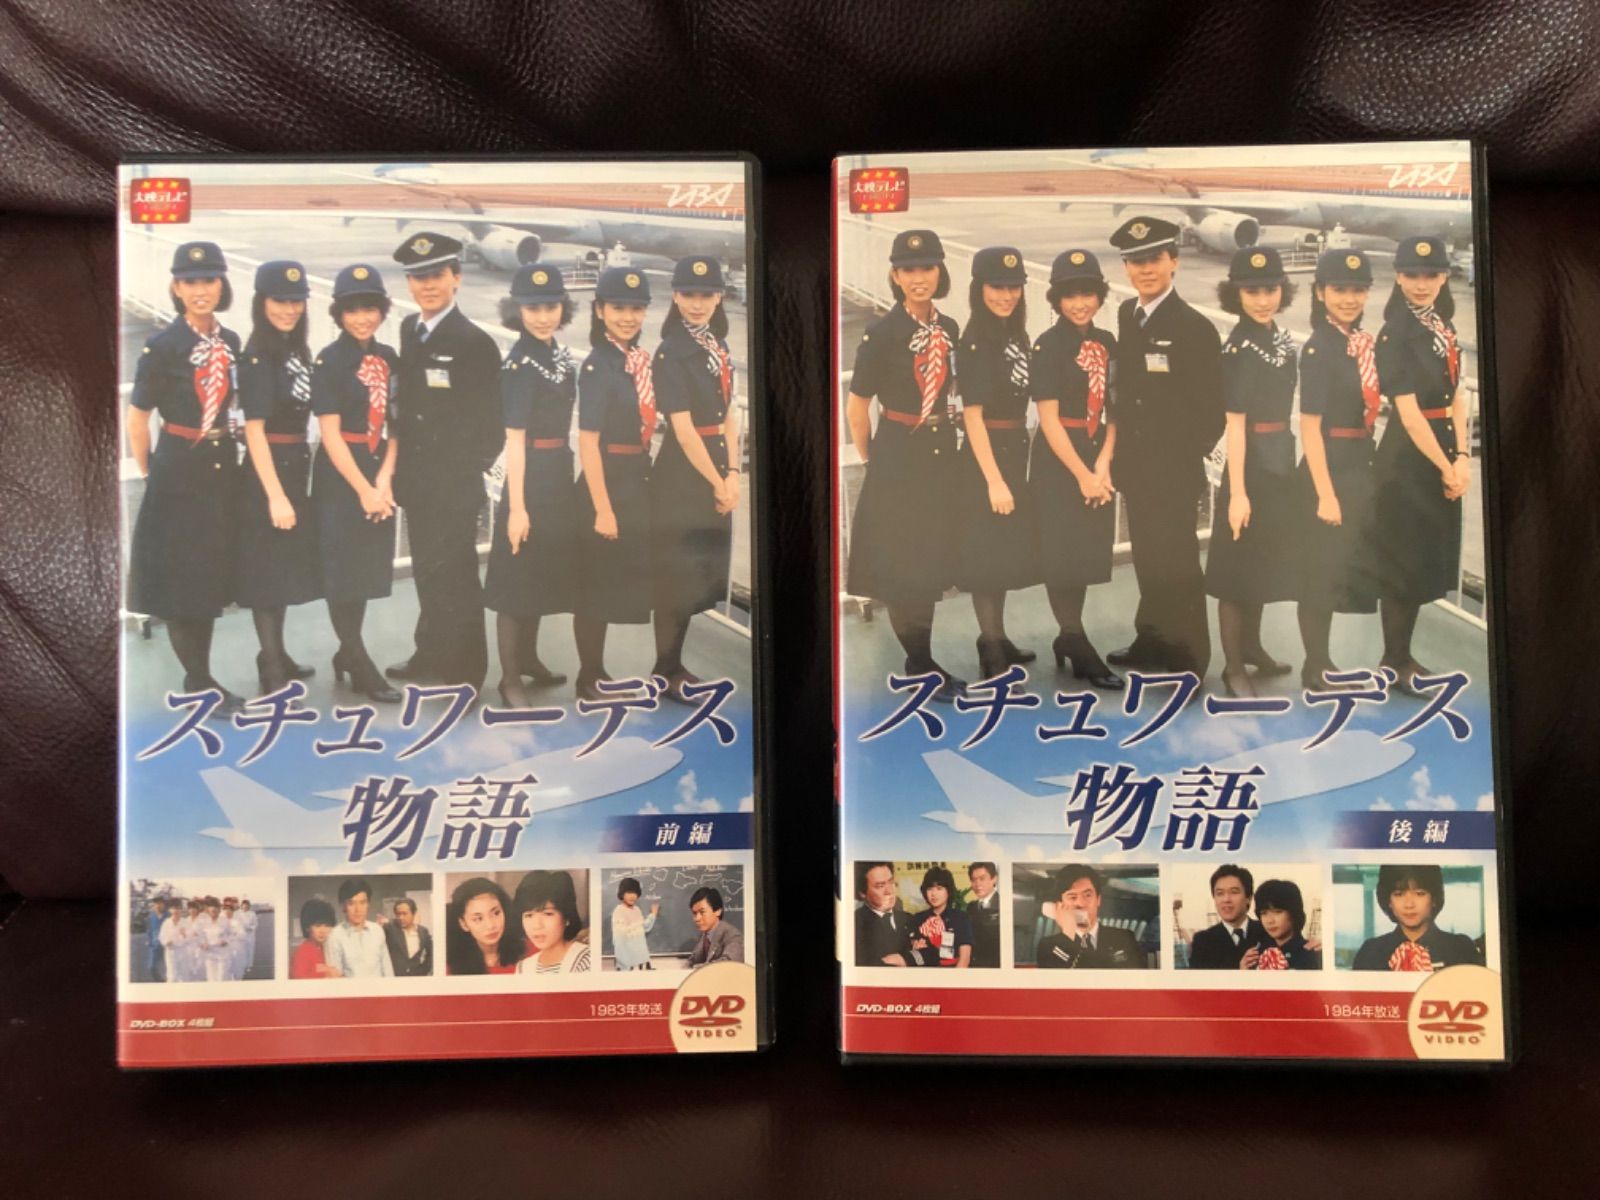 DVD-BOスチュワーデス物語 DVD-BOX 前編後編〈各4枚組〉 - TVドラマ